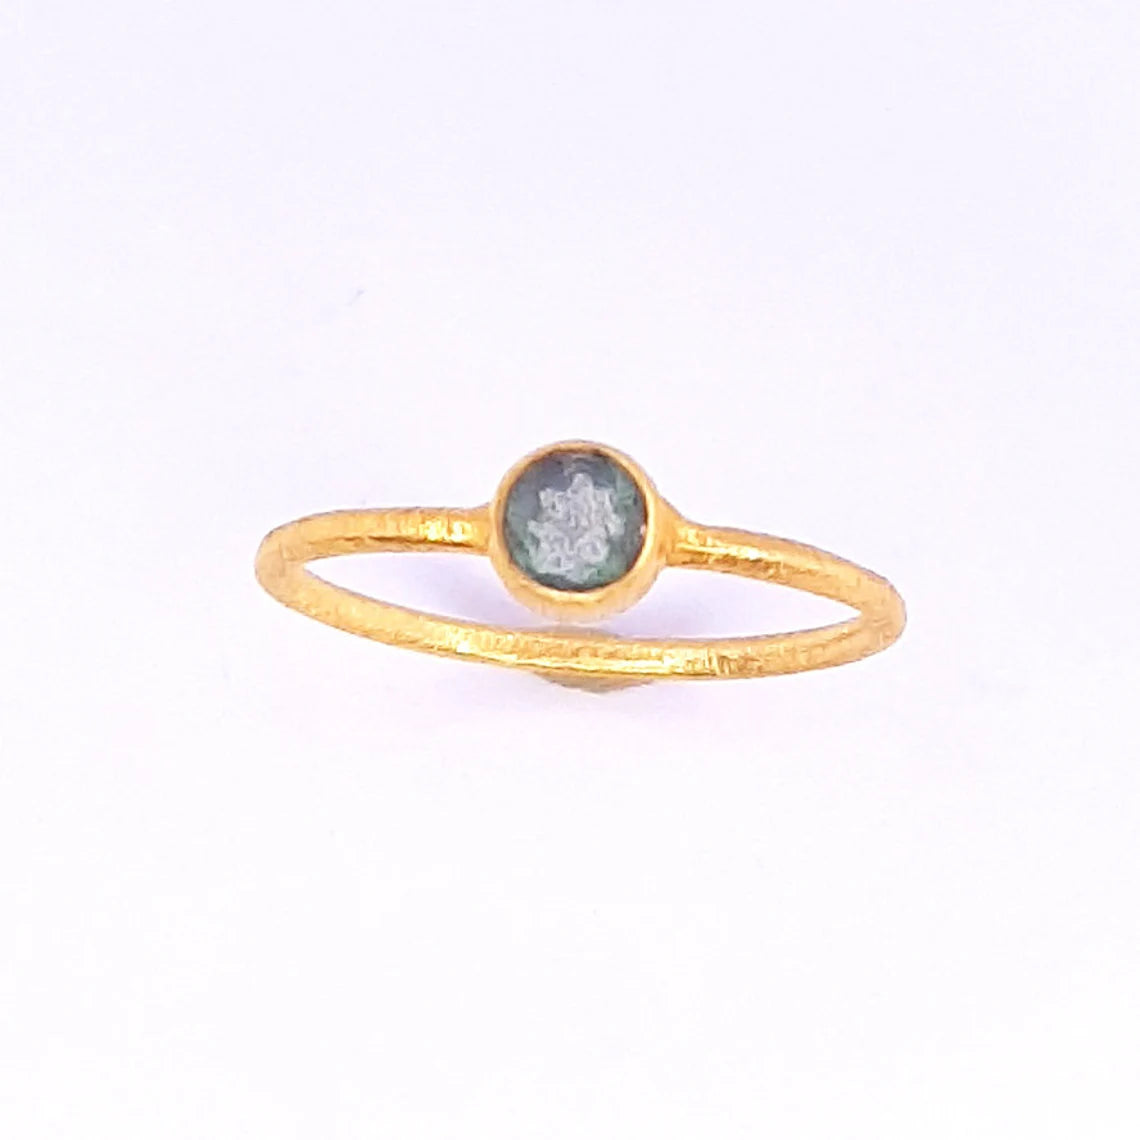 Labradorite Gemstone Ring - 925 Sterling Silver Labradorite Gold Ring - Round Labradorite Ring